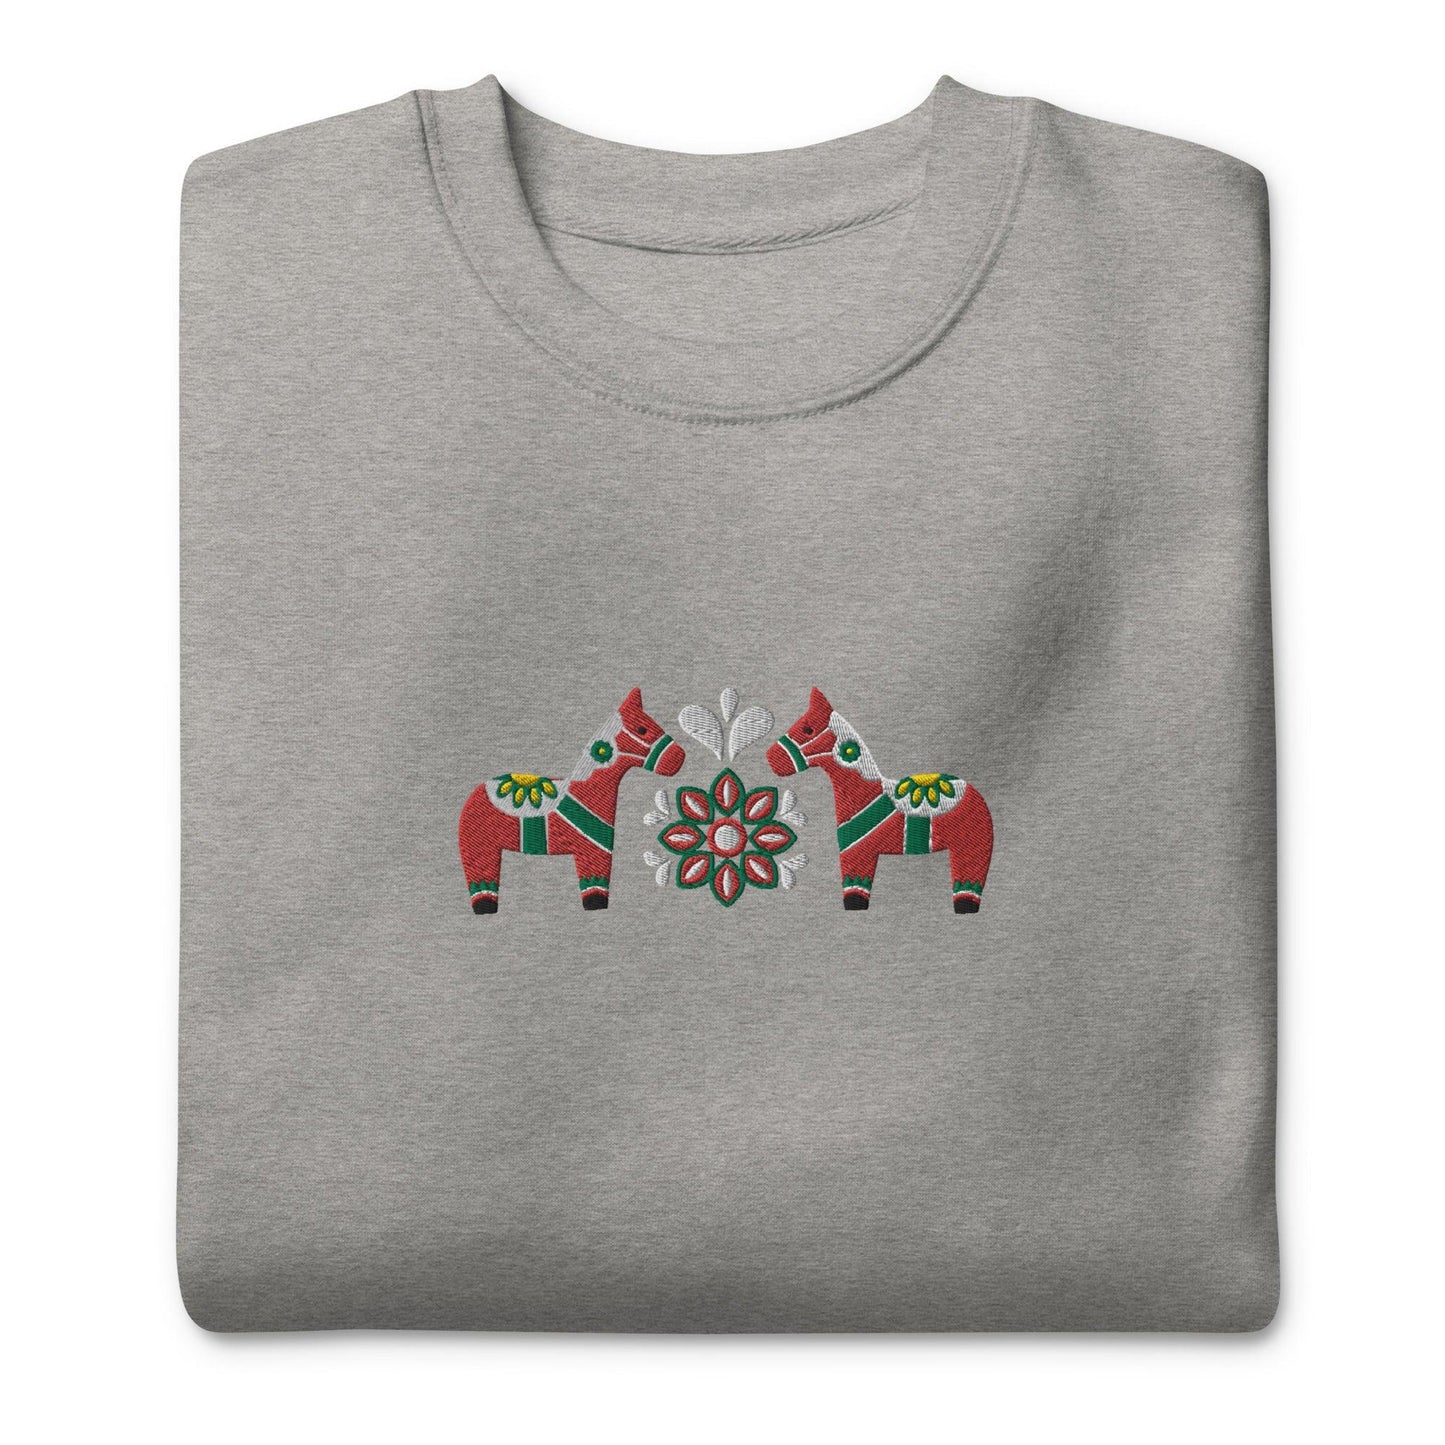 Swedish Red Dala Horse Sweatshirt - Embroidered - The Global Wanderer